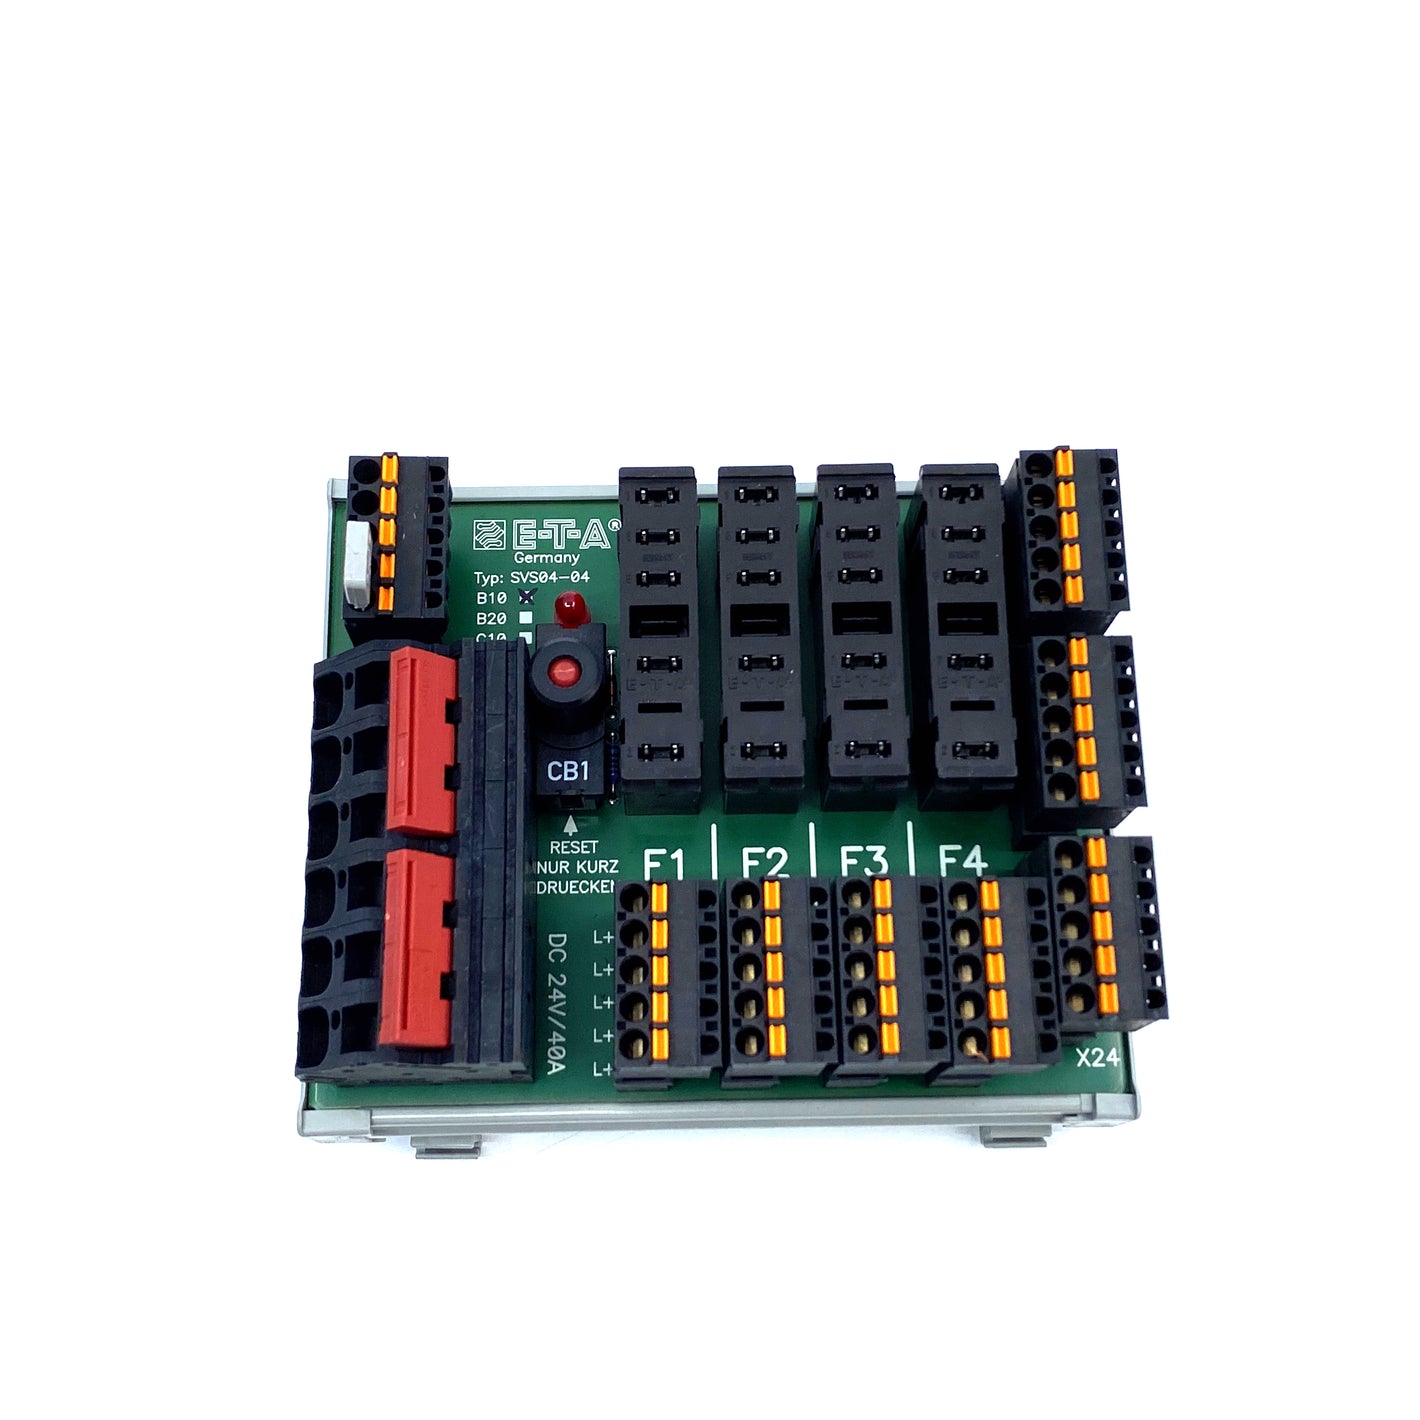 ETA SVS04-04 power distribution system 